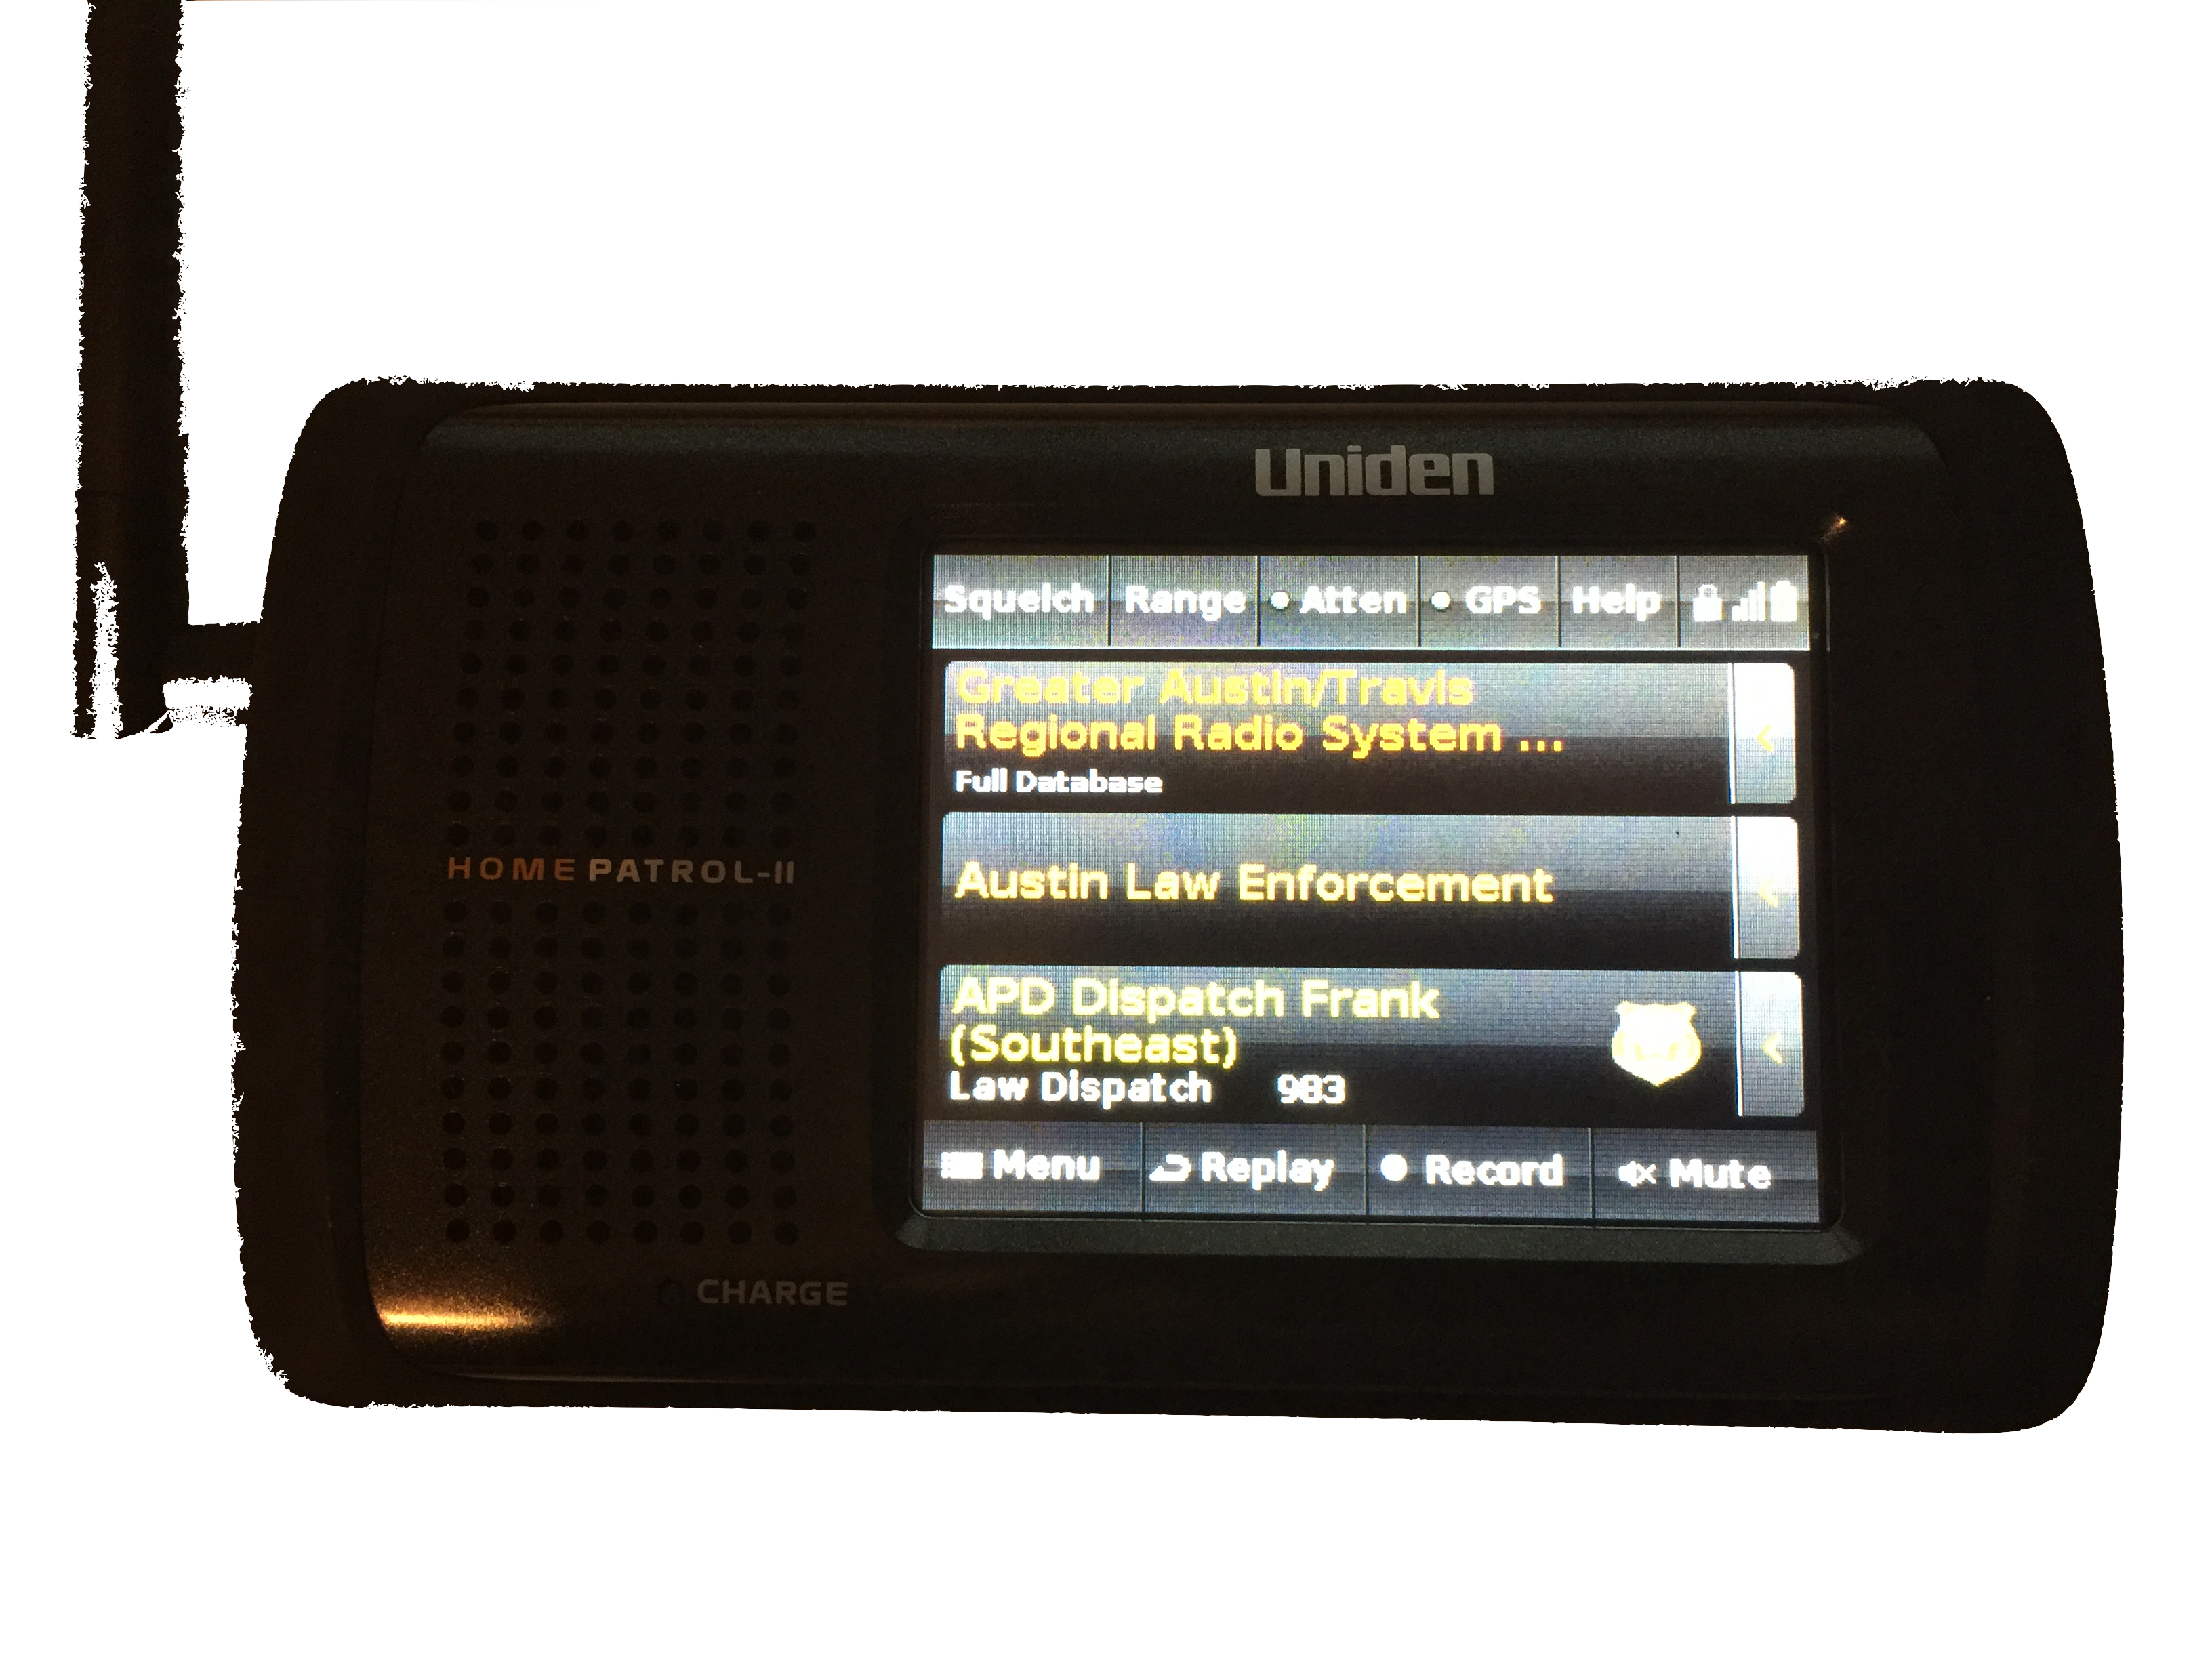 Uniden home patrol 2 software upgrade